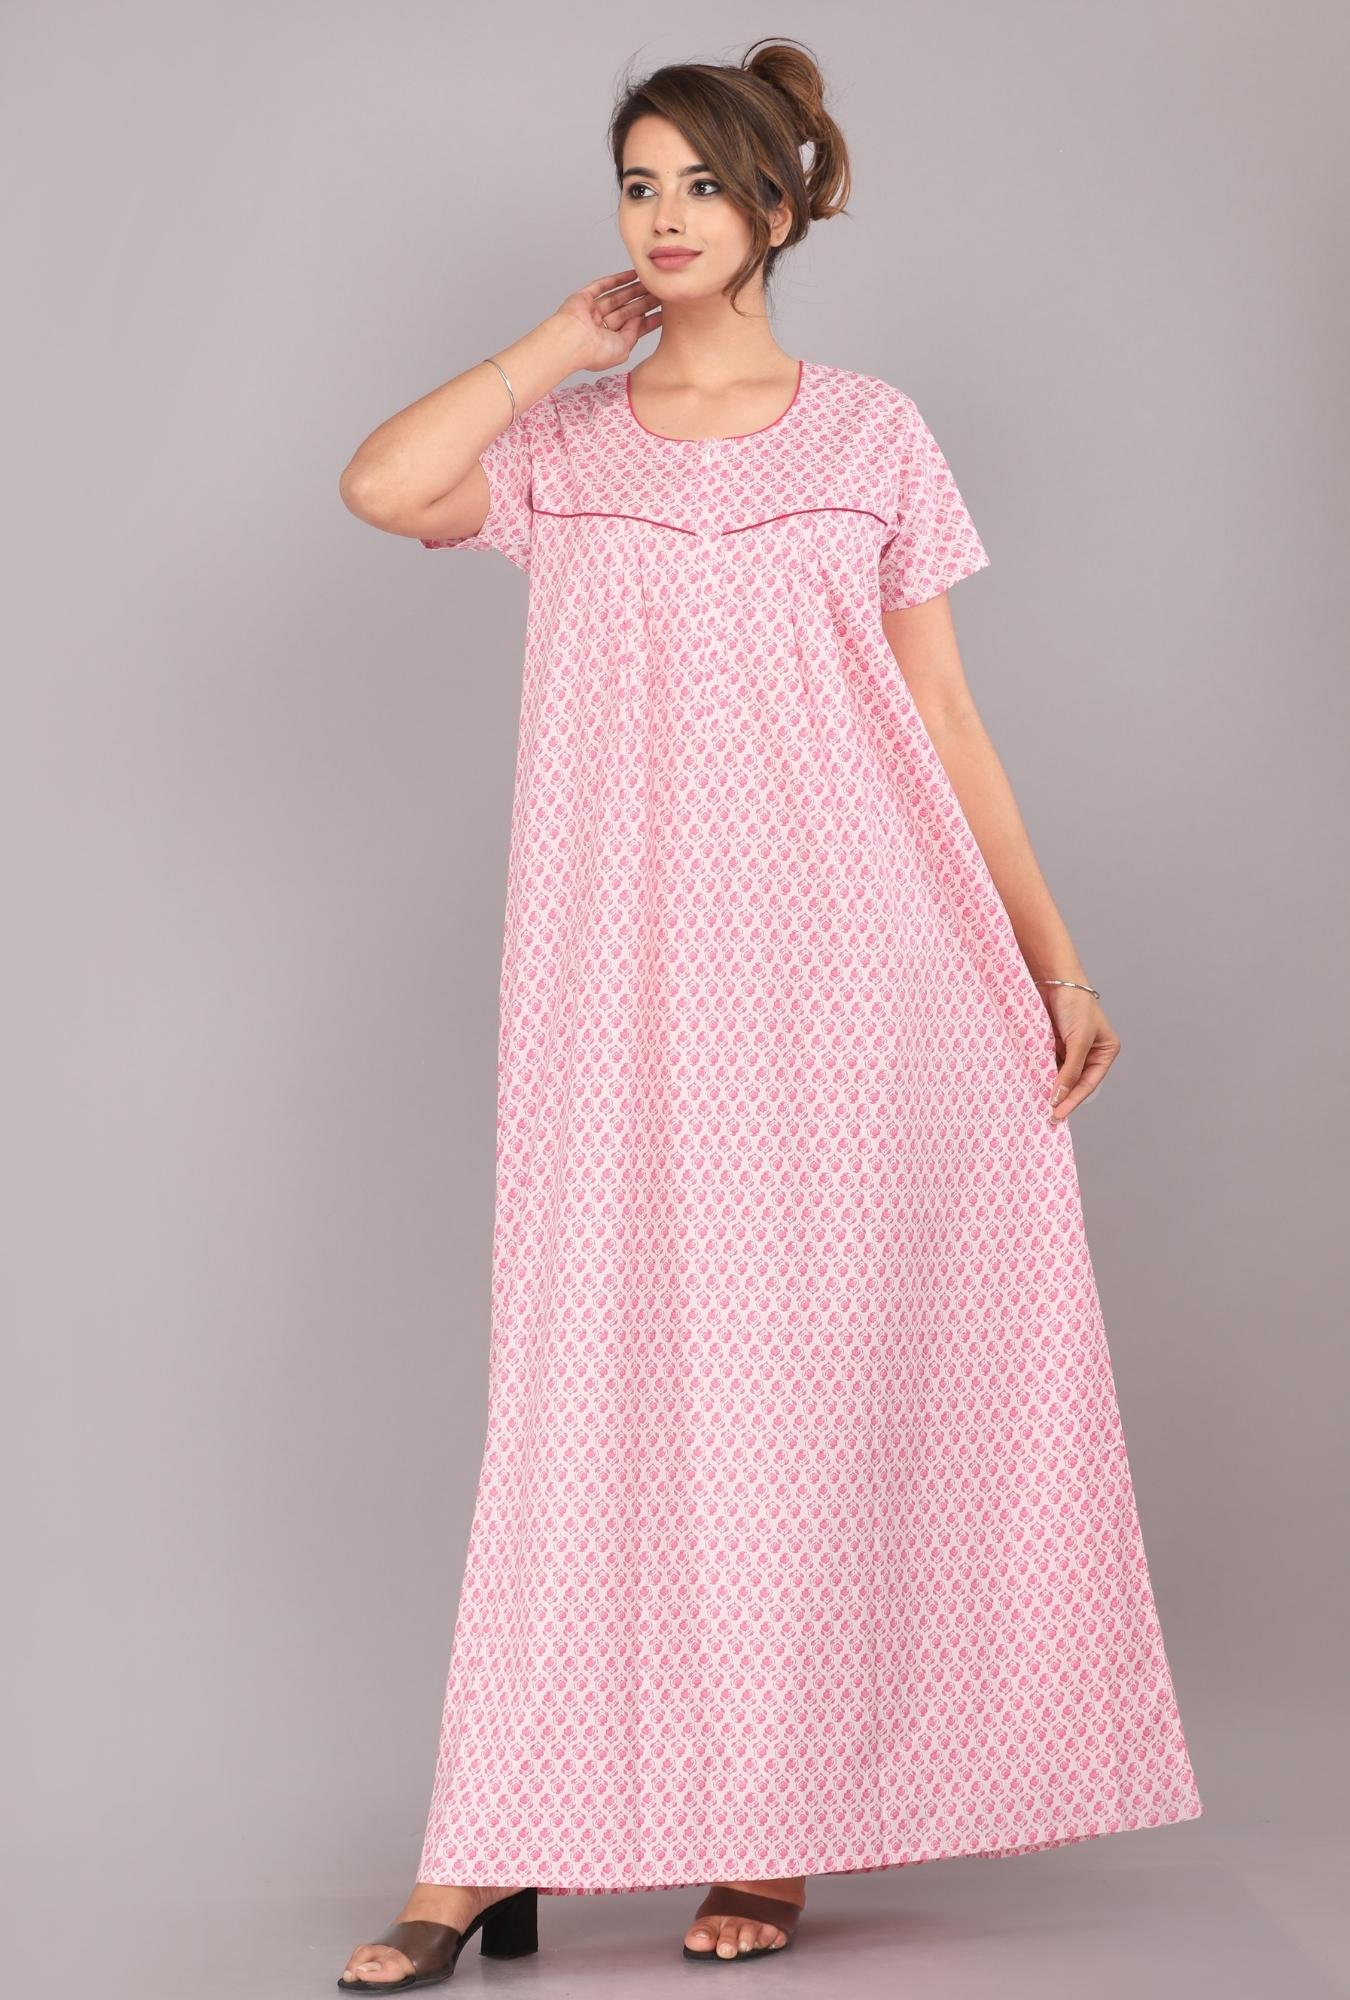 Dancing Flower Pink Cotton Printed Nightwear Gowns